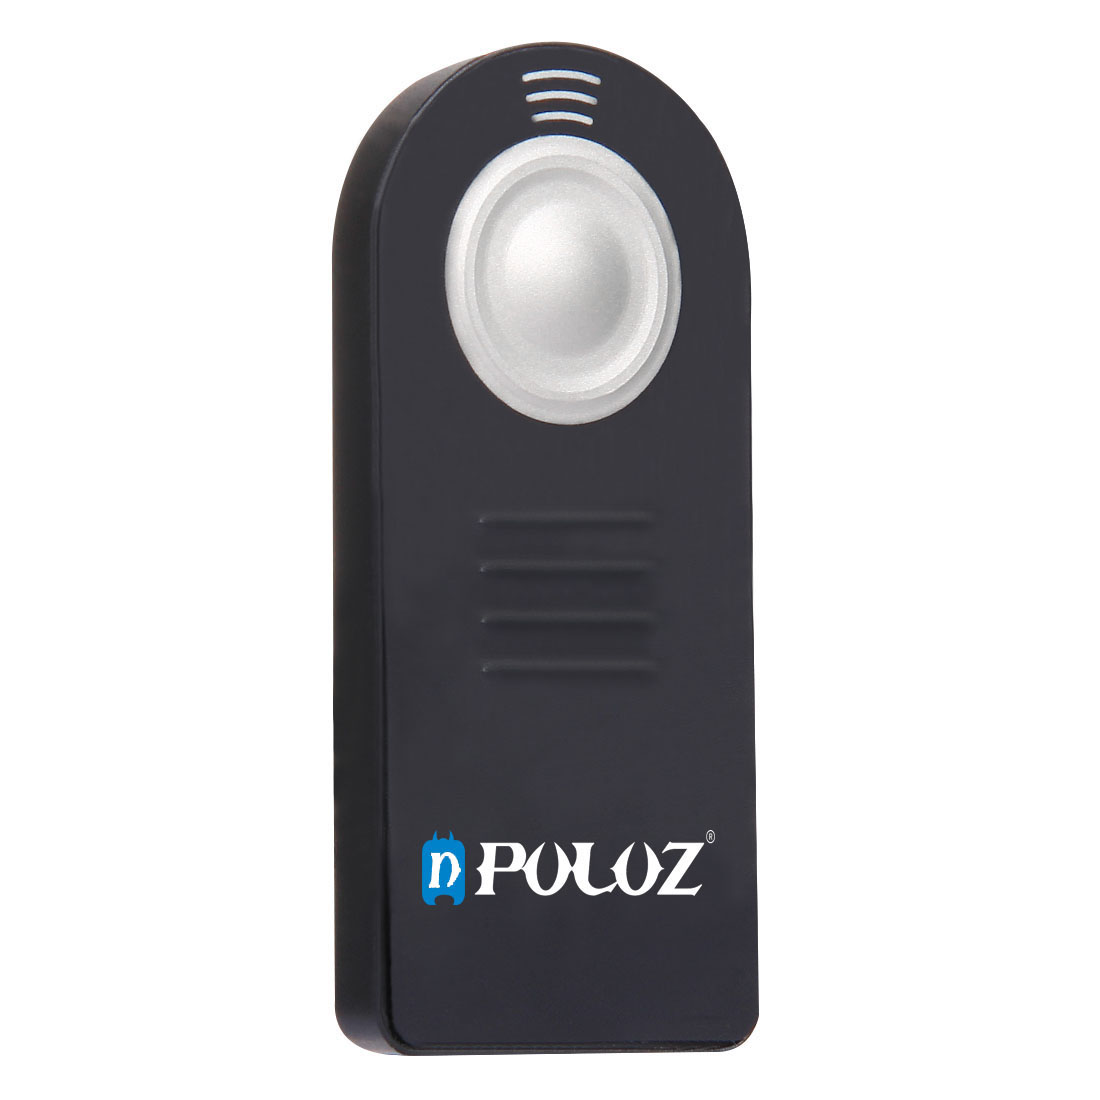 

PULUZ PU6501 Wireless IR Remote Control Shutter Release for DSLR / SLR Camera